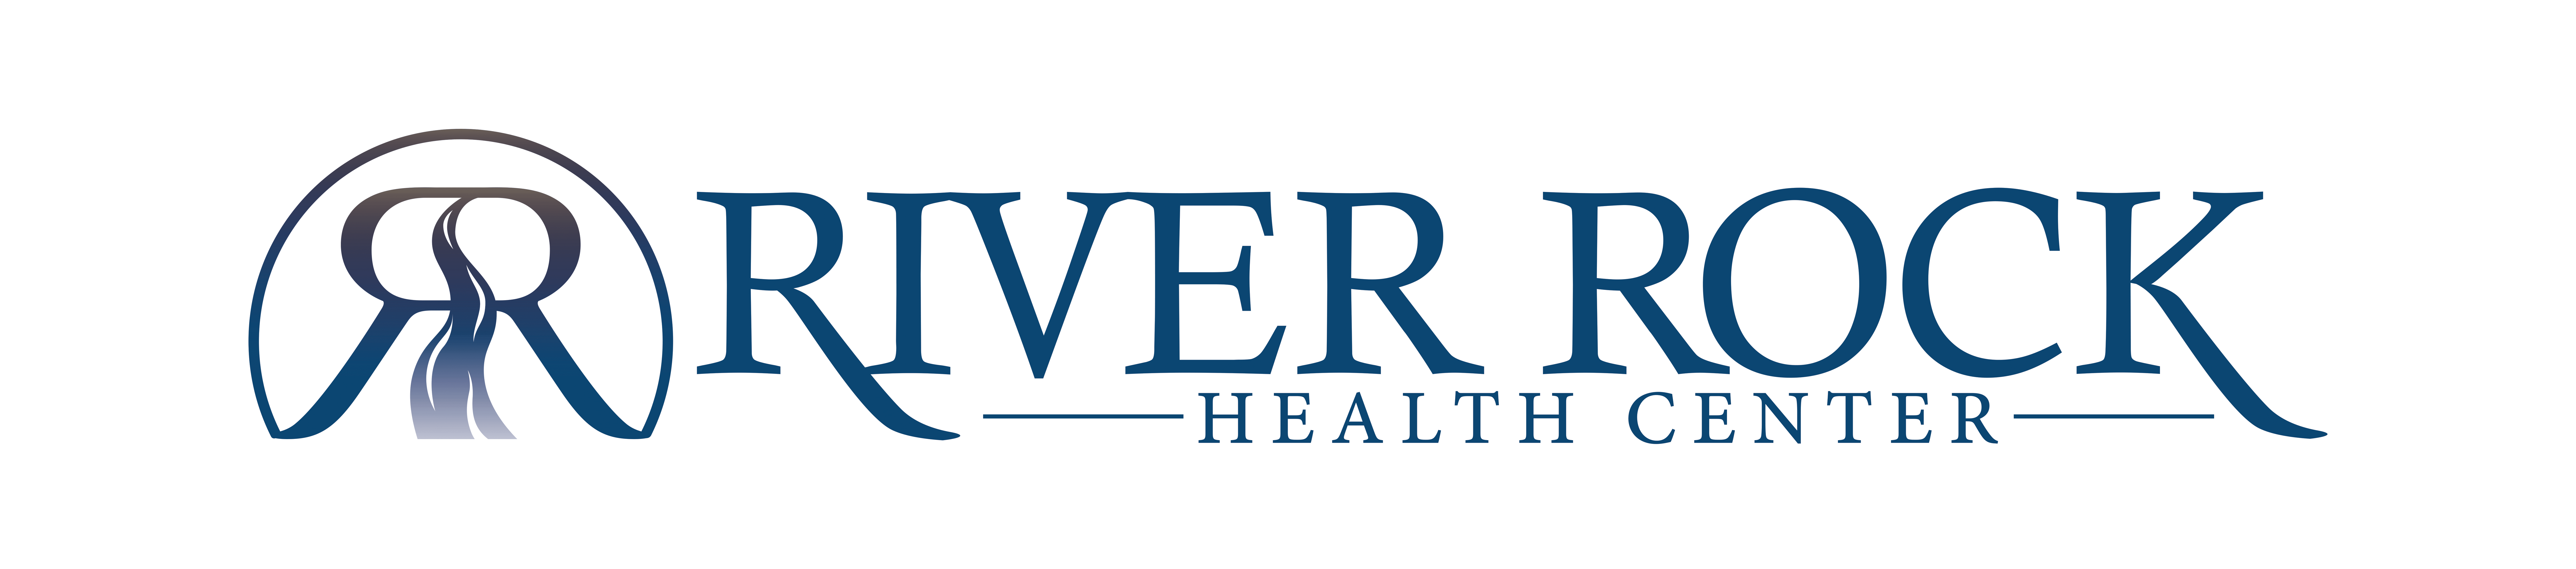 River Rock Health Center Monument Sign81565-1